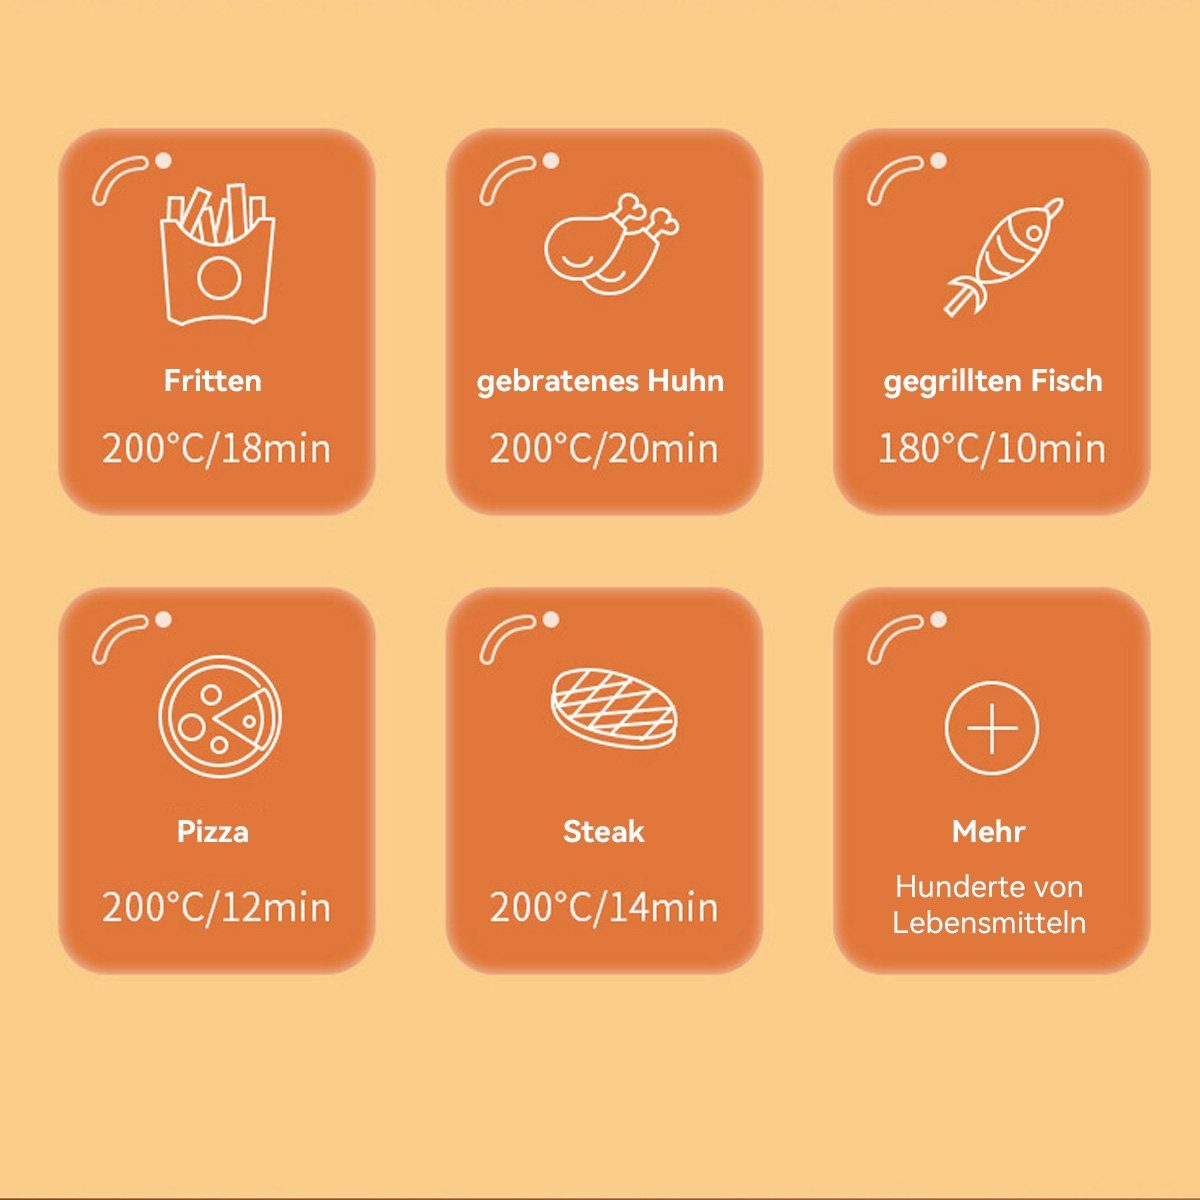 Luftfritteuse,15L 1400,00 Heißluftfritteuse fryer Fritteuse,Heißluft-ofen,Edelstahl,1400W, W Grun DOPWii Air